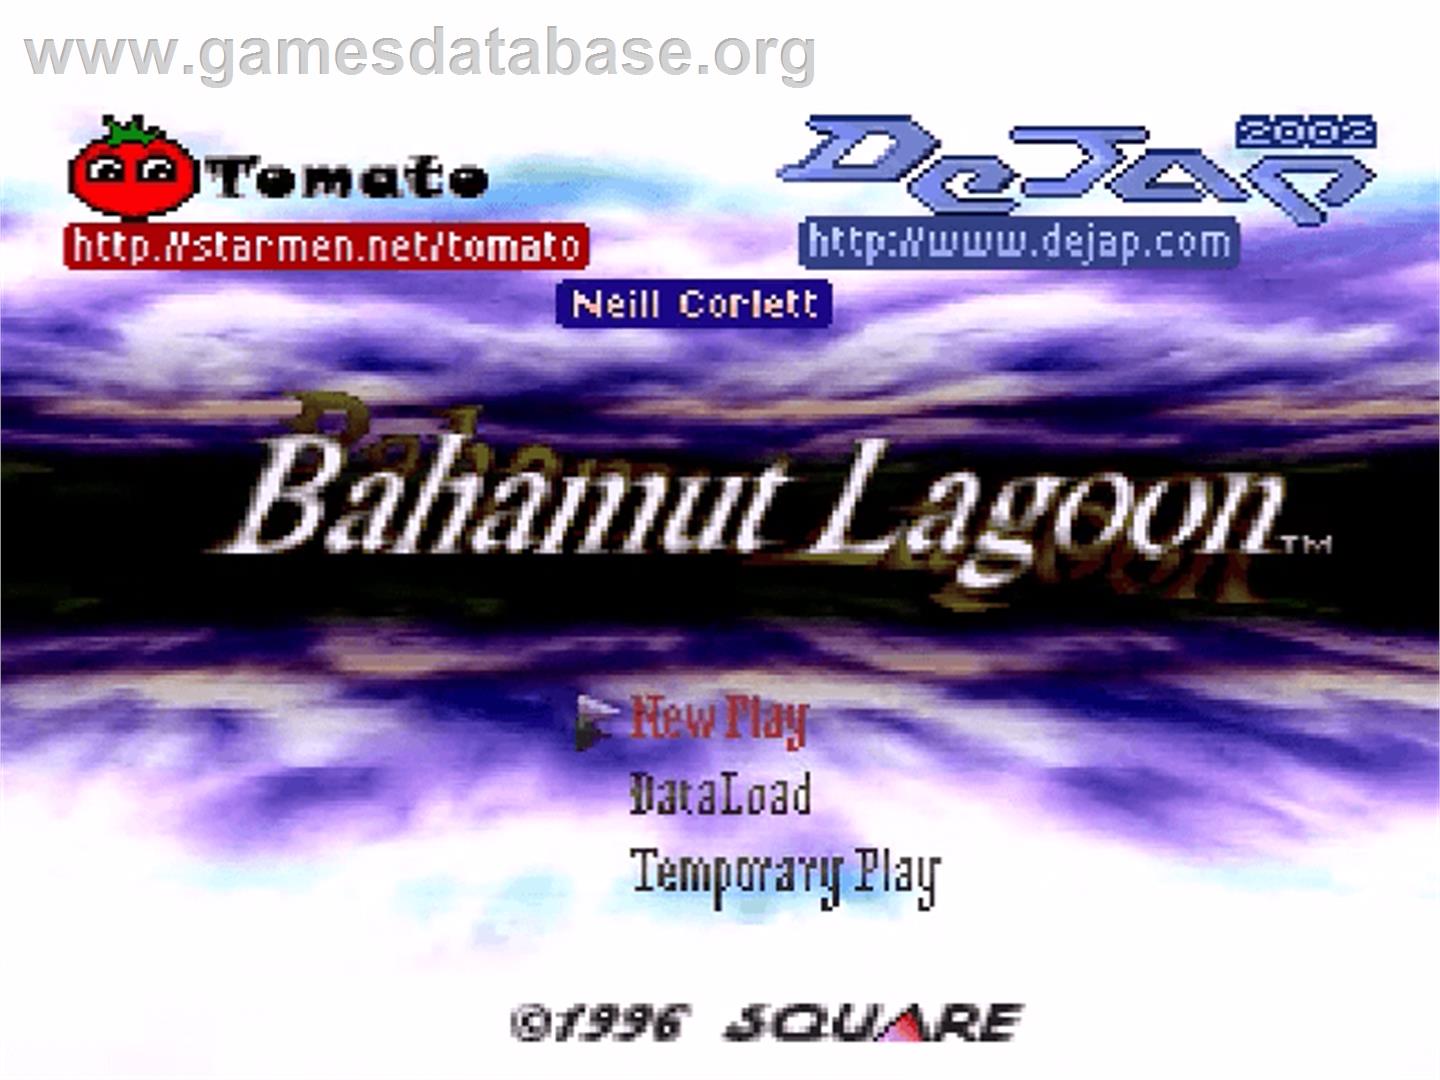 Bahamut Lagoon - Nintendo SNES - Artwork - Title Screen